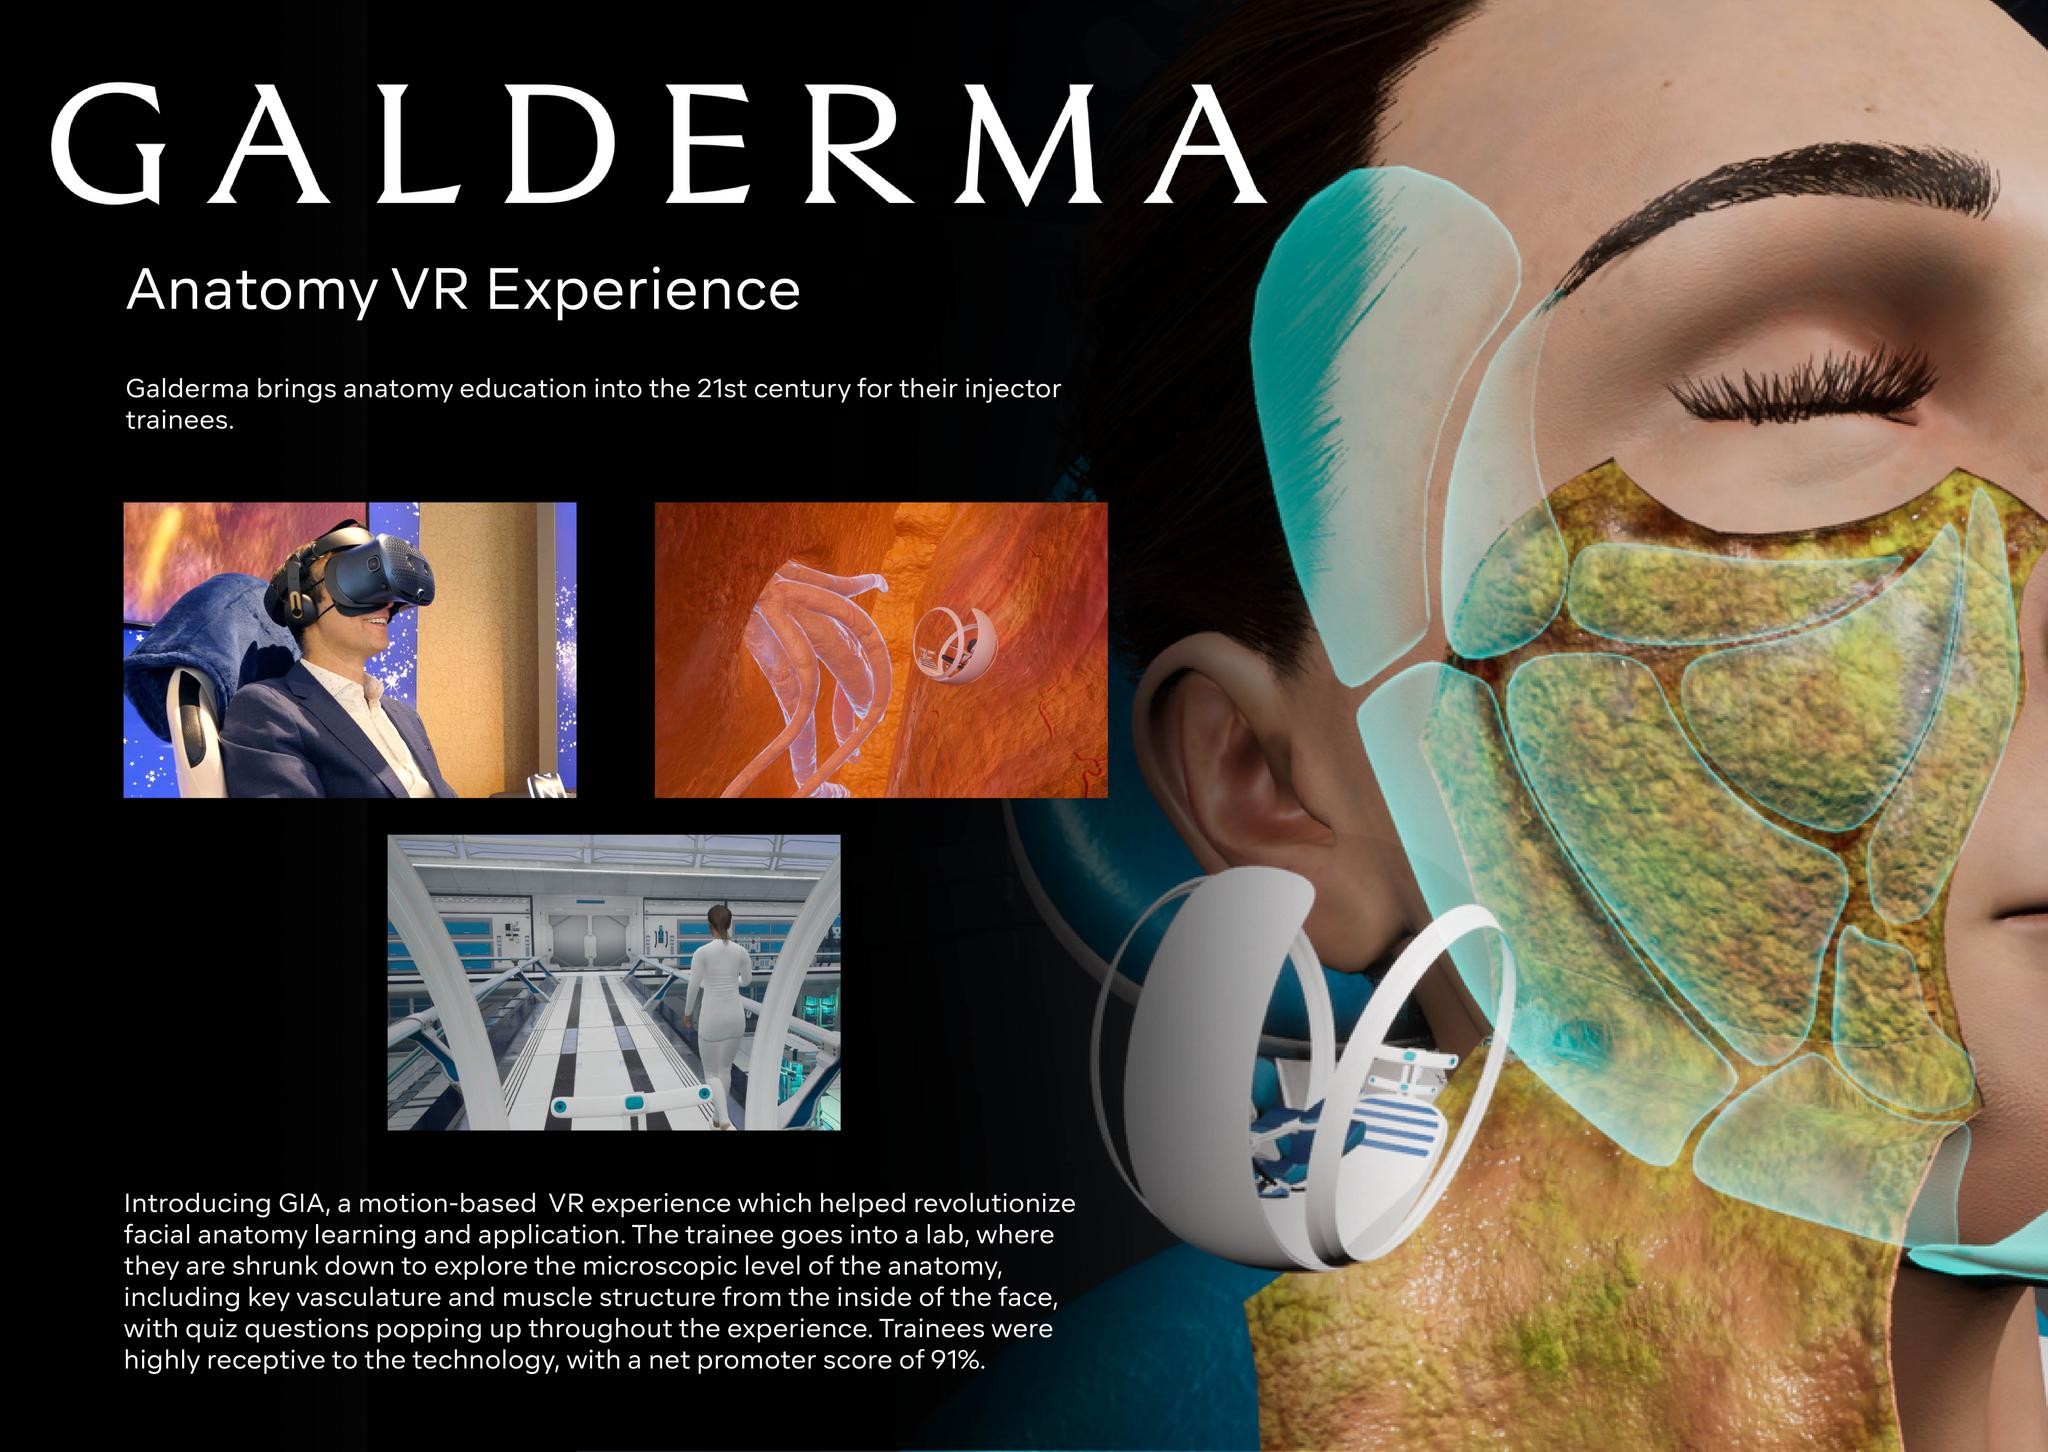 Galderma Anatomy VR